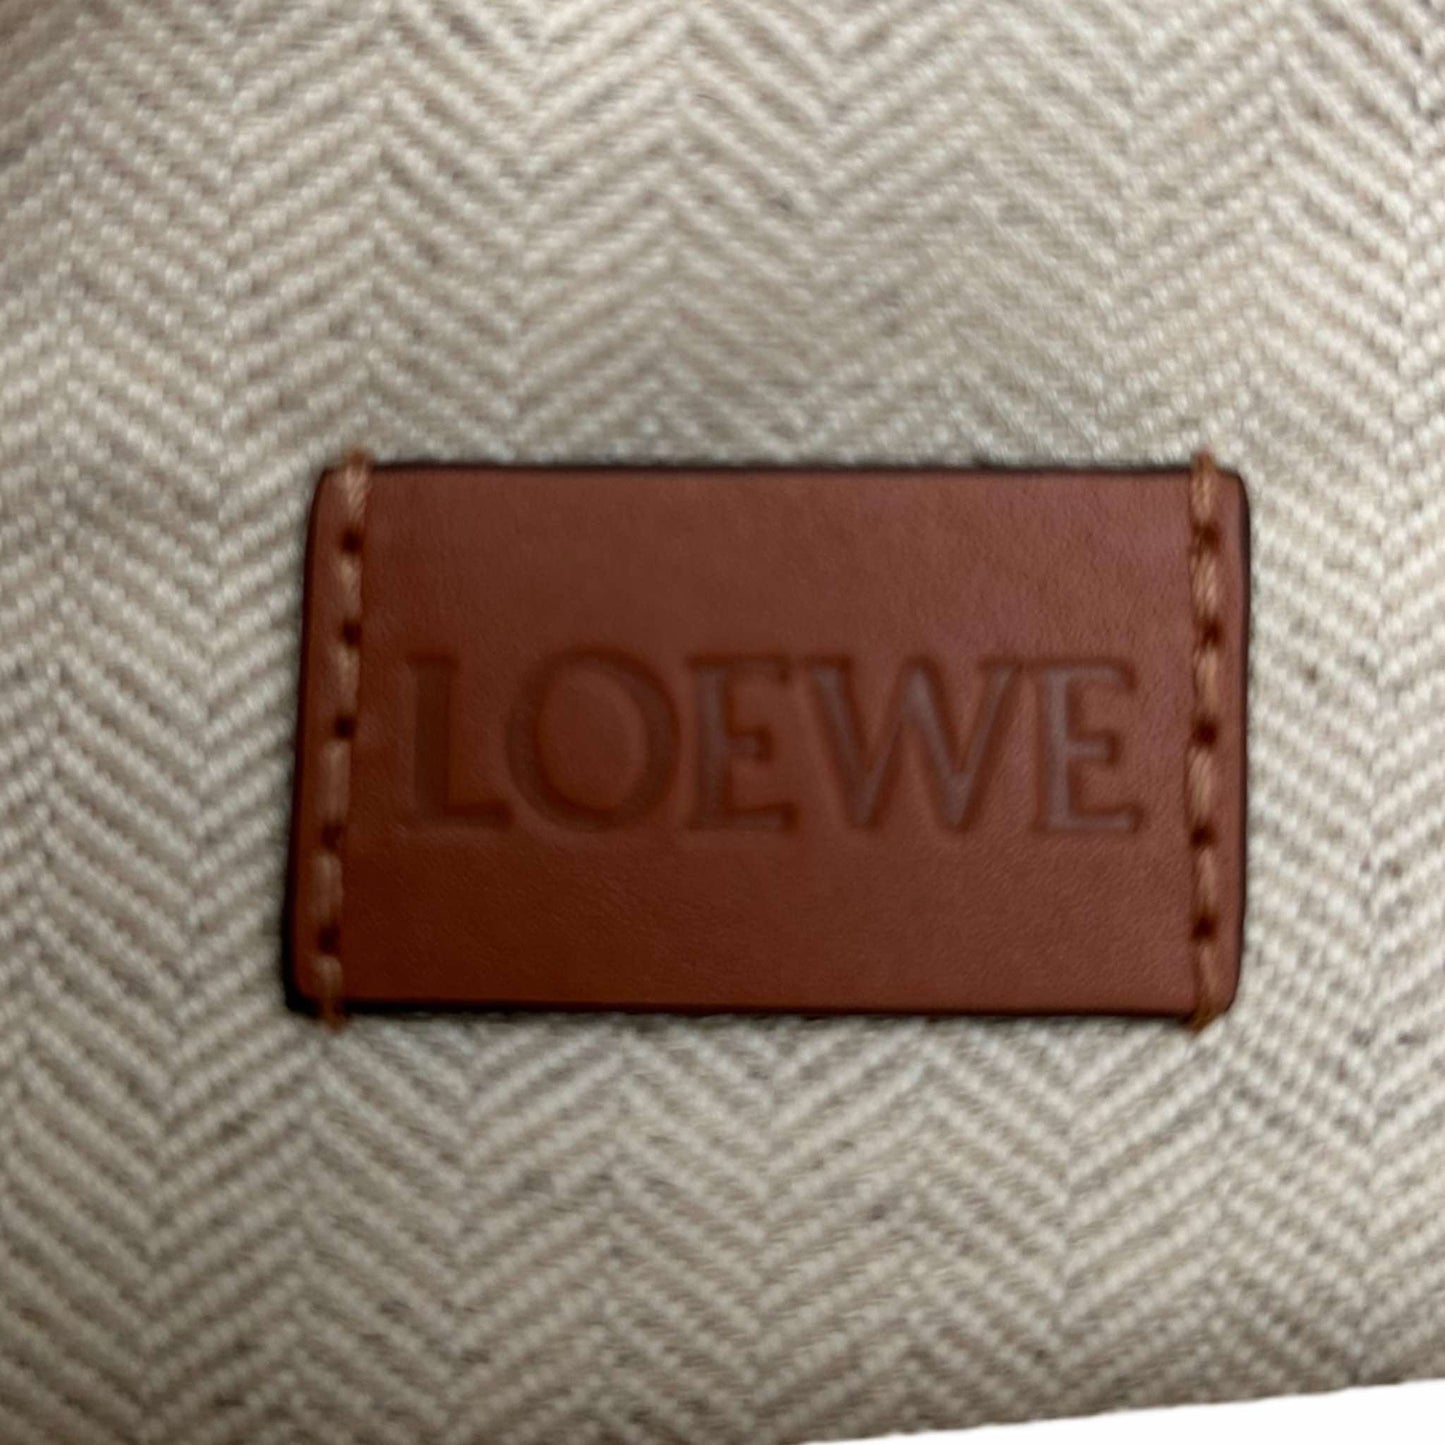 Loewe Anagram Drawstring Pouch